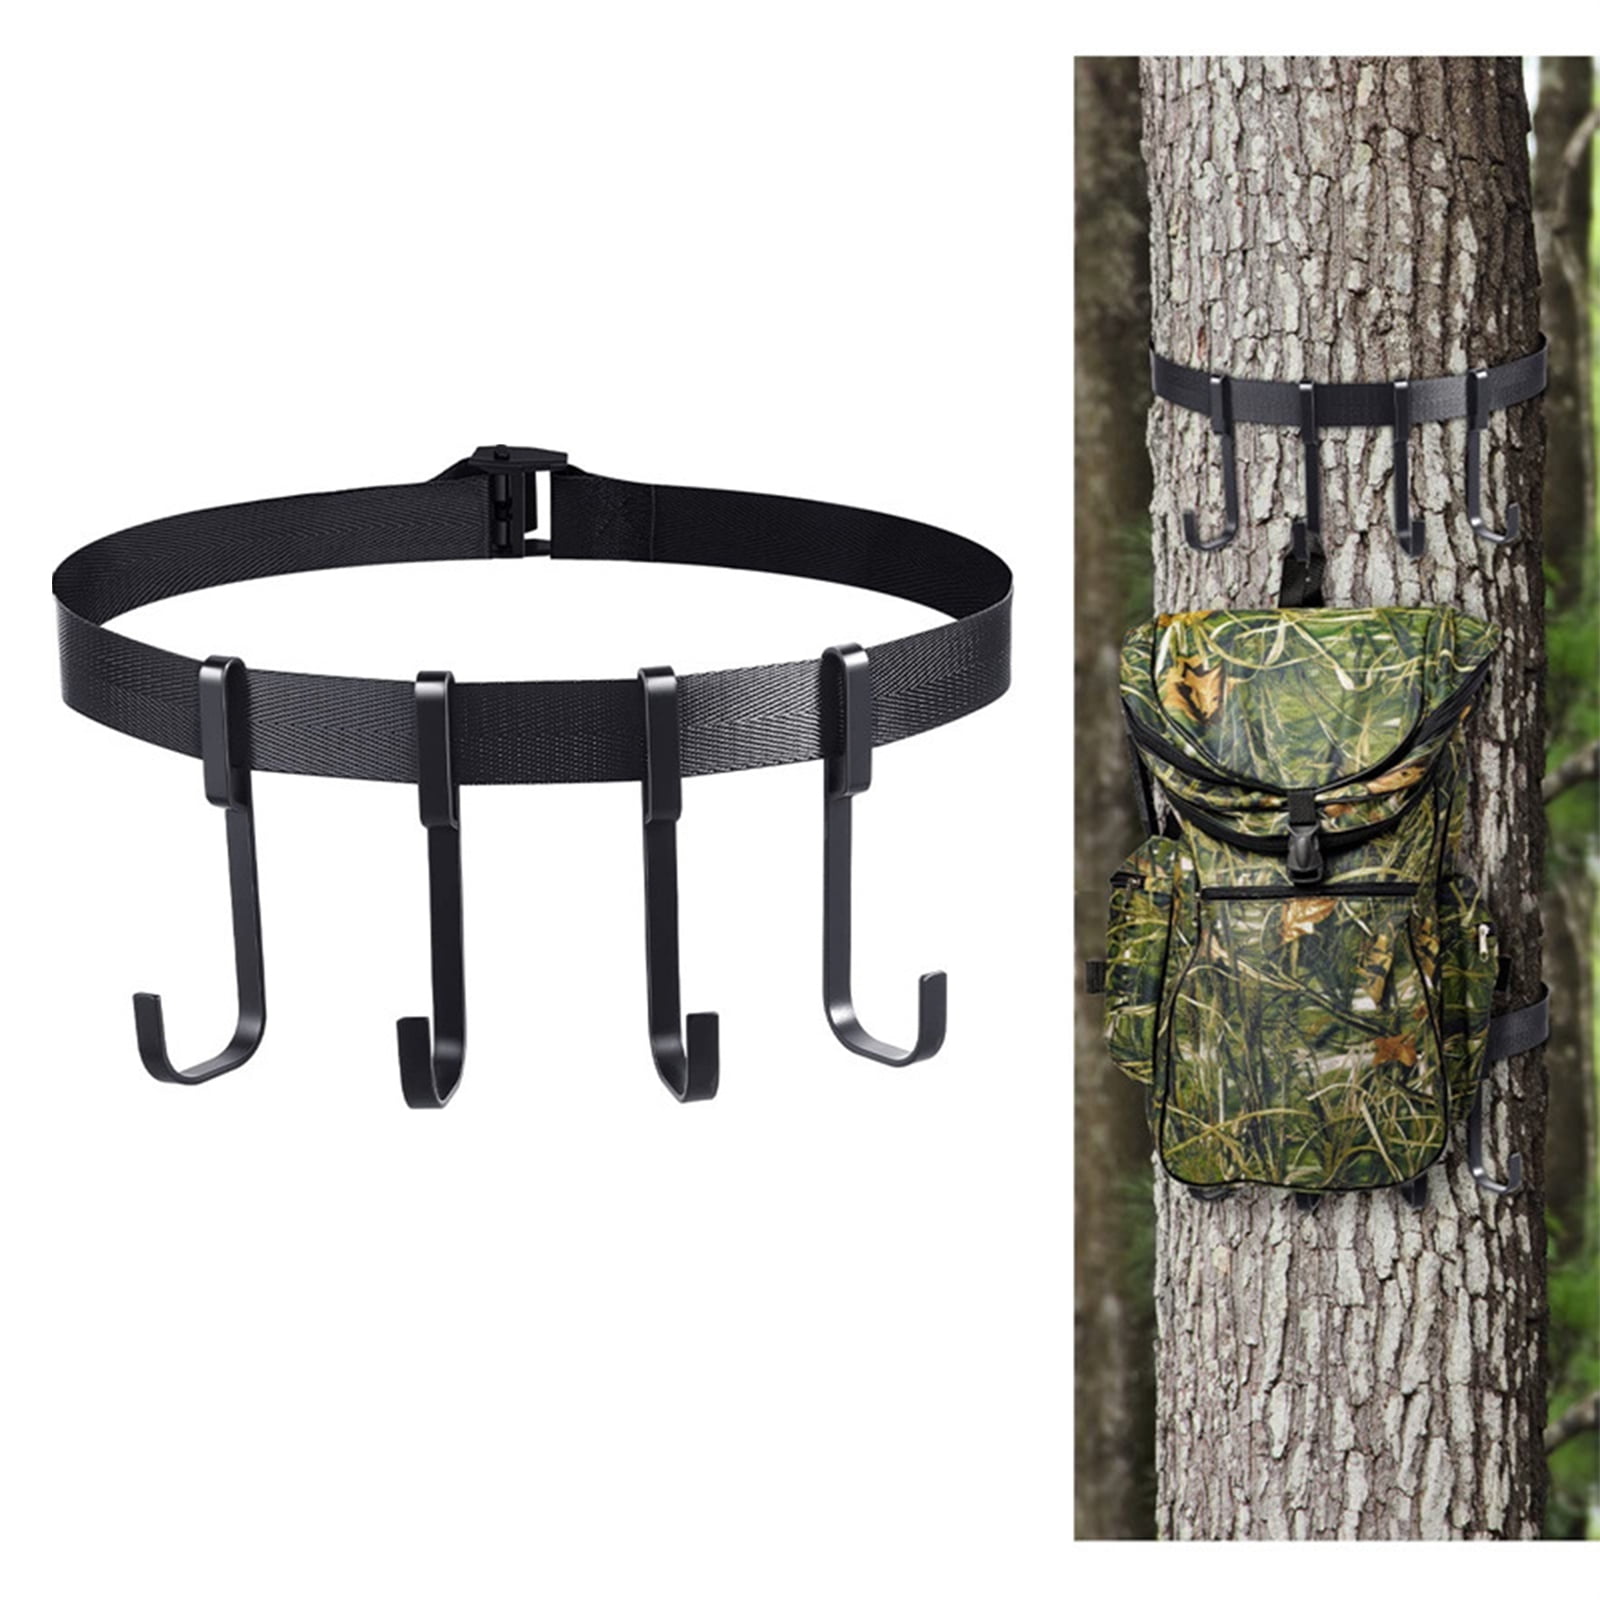 Accessories for Deer Crossing Tree Stands, Inc.